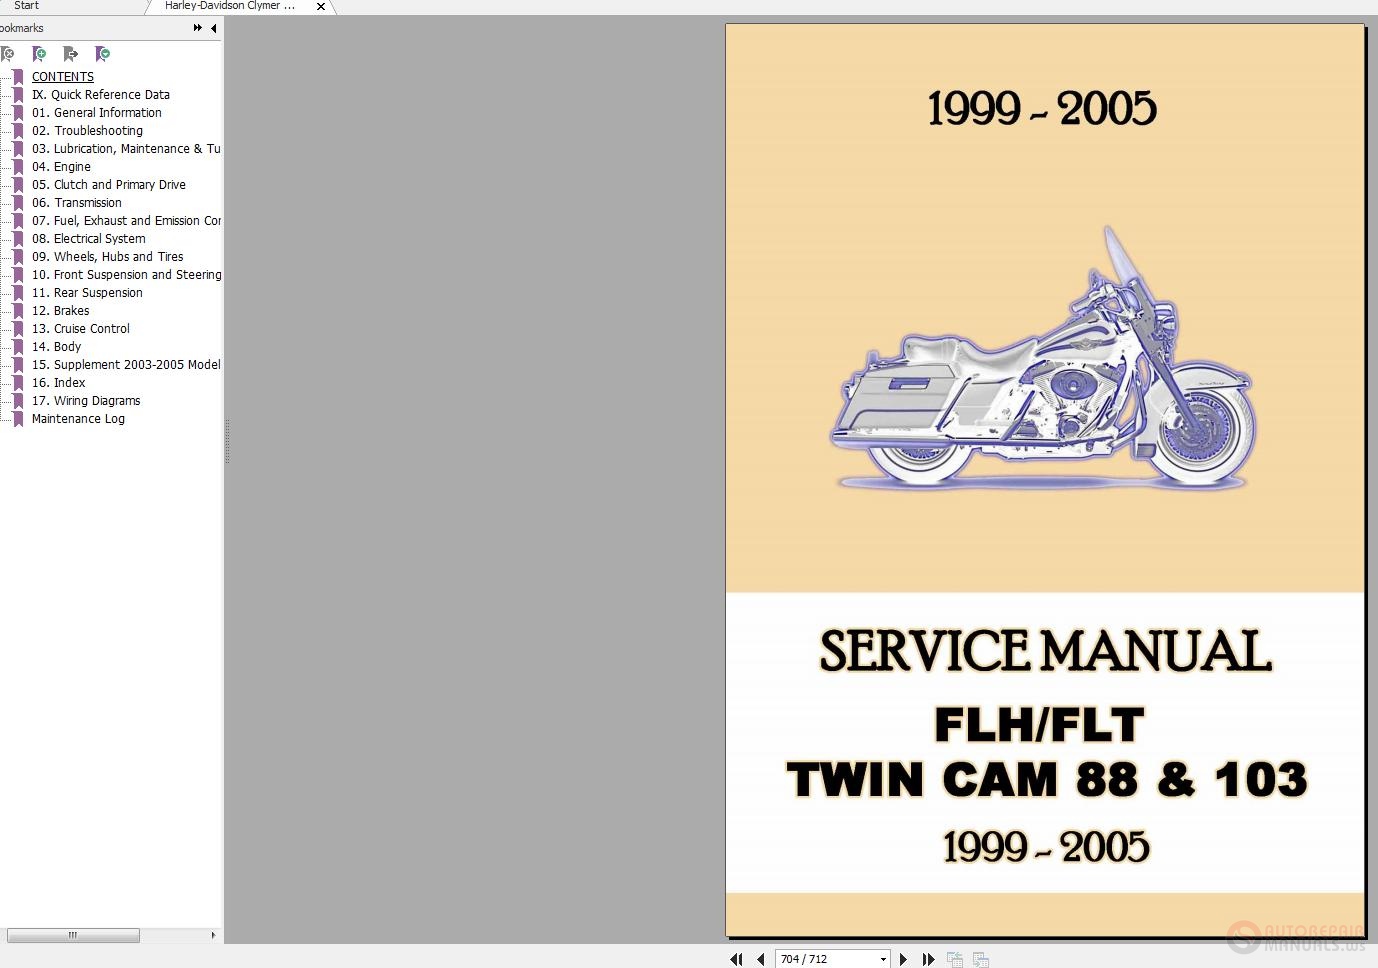 Harley-davidson Clymer 1999-2005 Flh-flt Twin Cam 88 103 Service Manual Auto Repair Manual Forum - Heavy Equipment Forums - Download Repair Workshop Manual